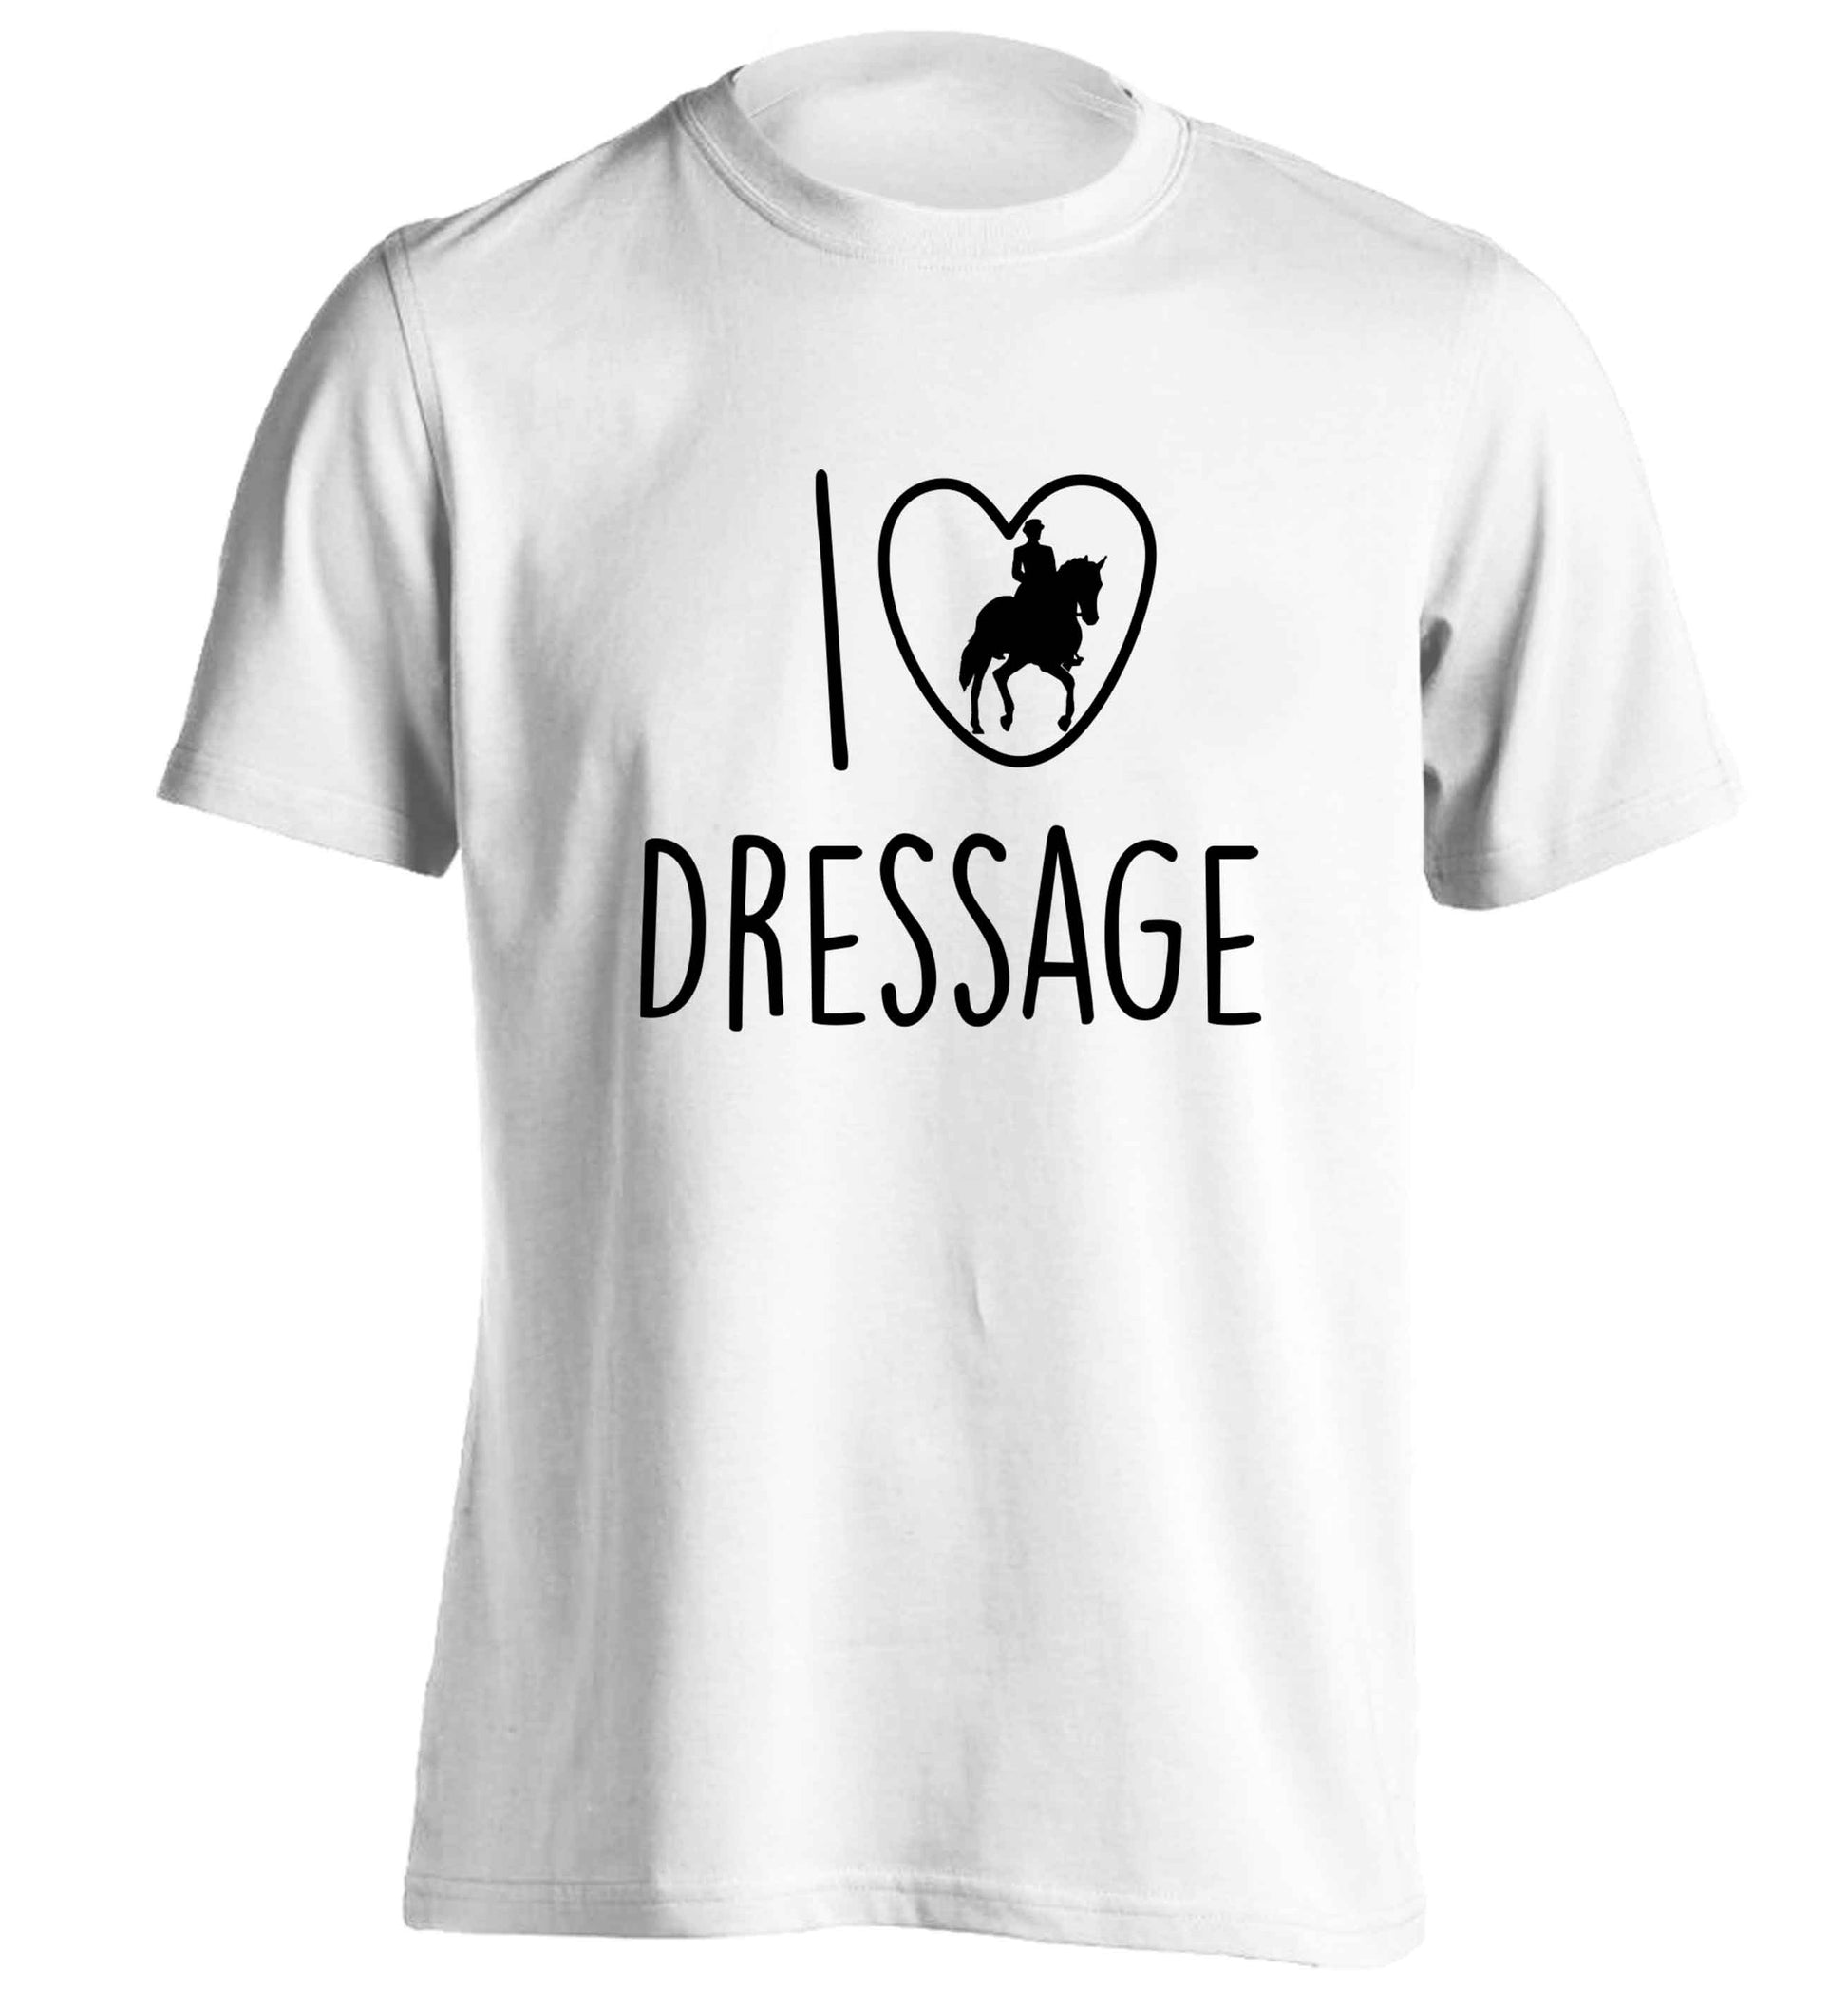 I love dressage adults unisex white Tshirt 2XL